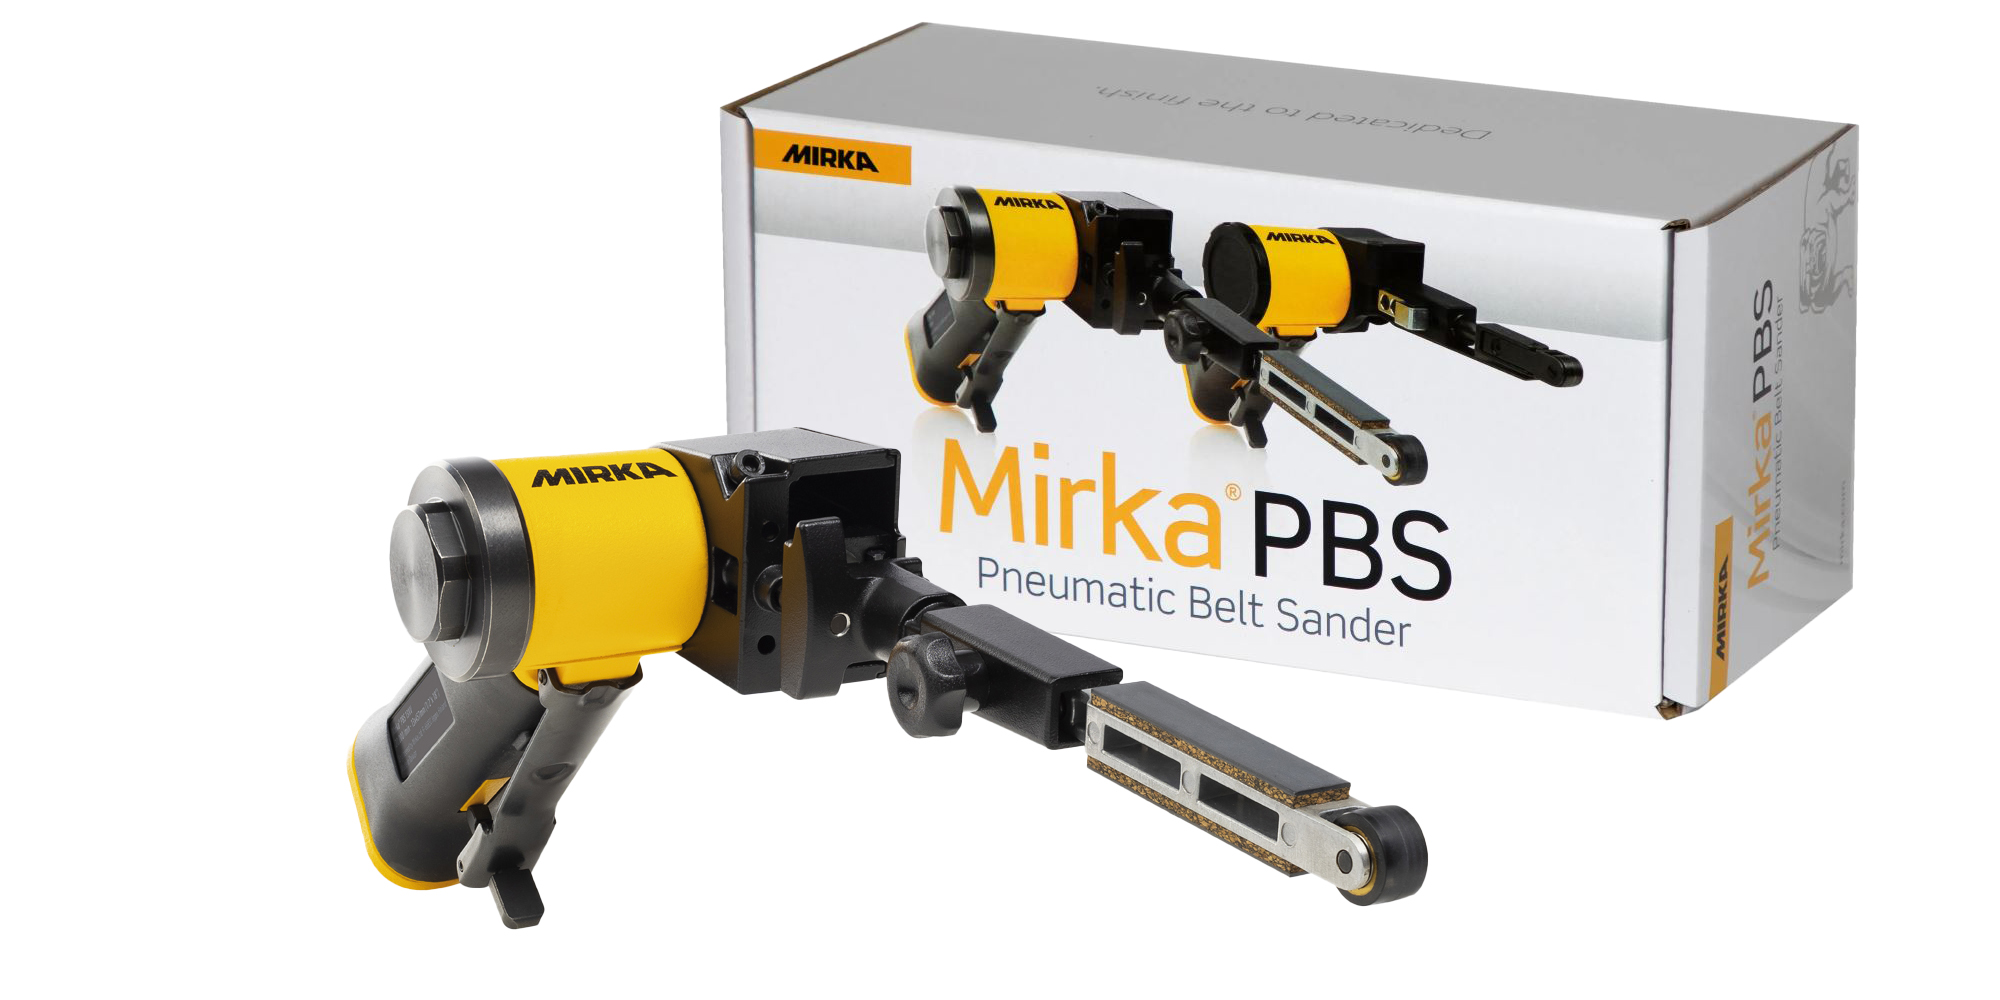 Abbildung Mirka PBS Feilenbandschleifer 13NV 13x457mm Verpackung und Maschine.